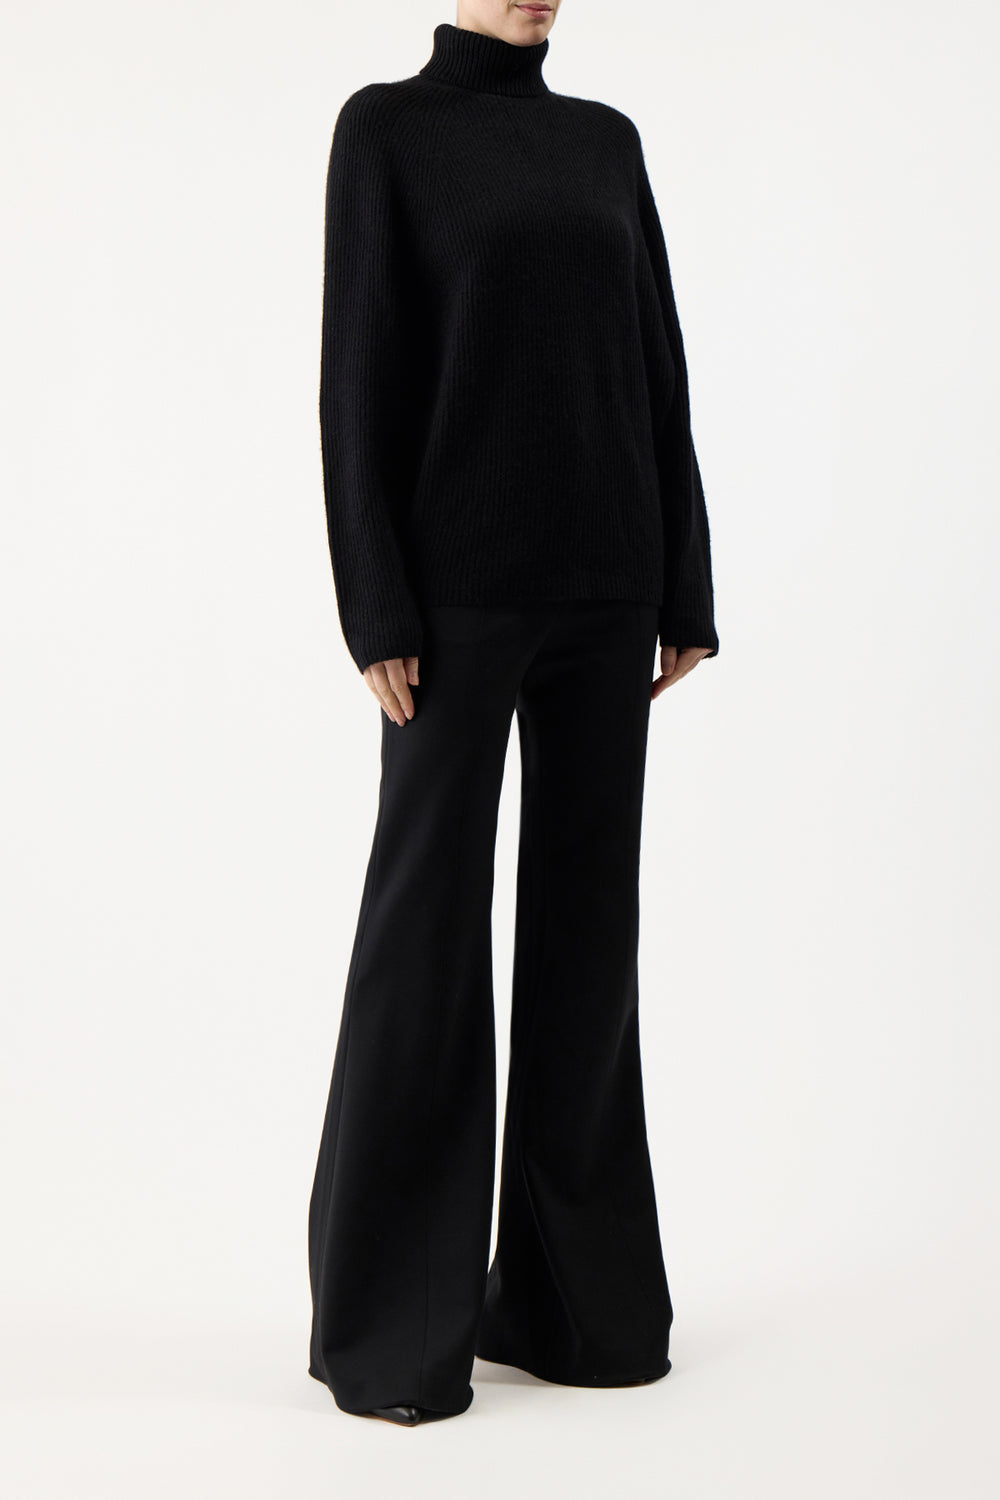 Wigman Knit Turtleneck Sweater in Black Cashmere – Gabriela Hearst